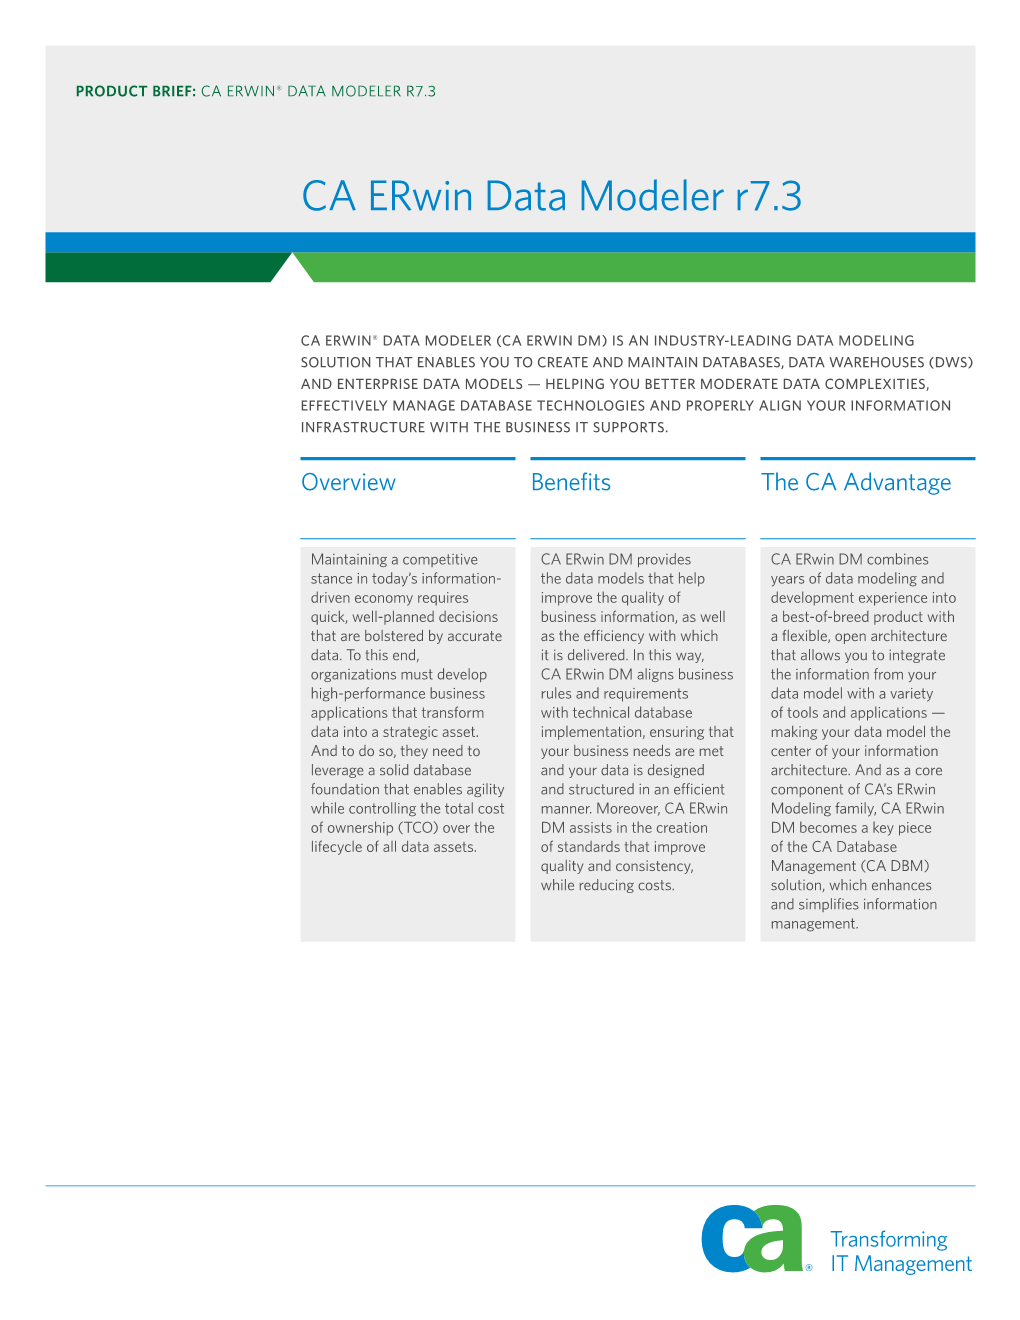 CA Erwin Data Modeler R7.3